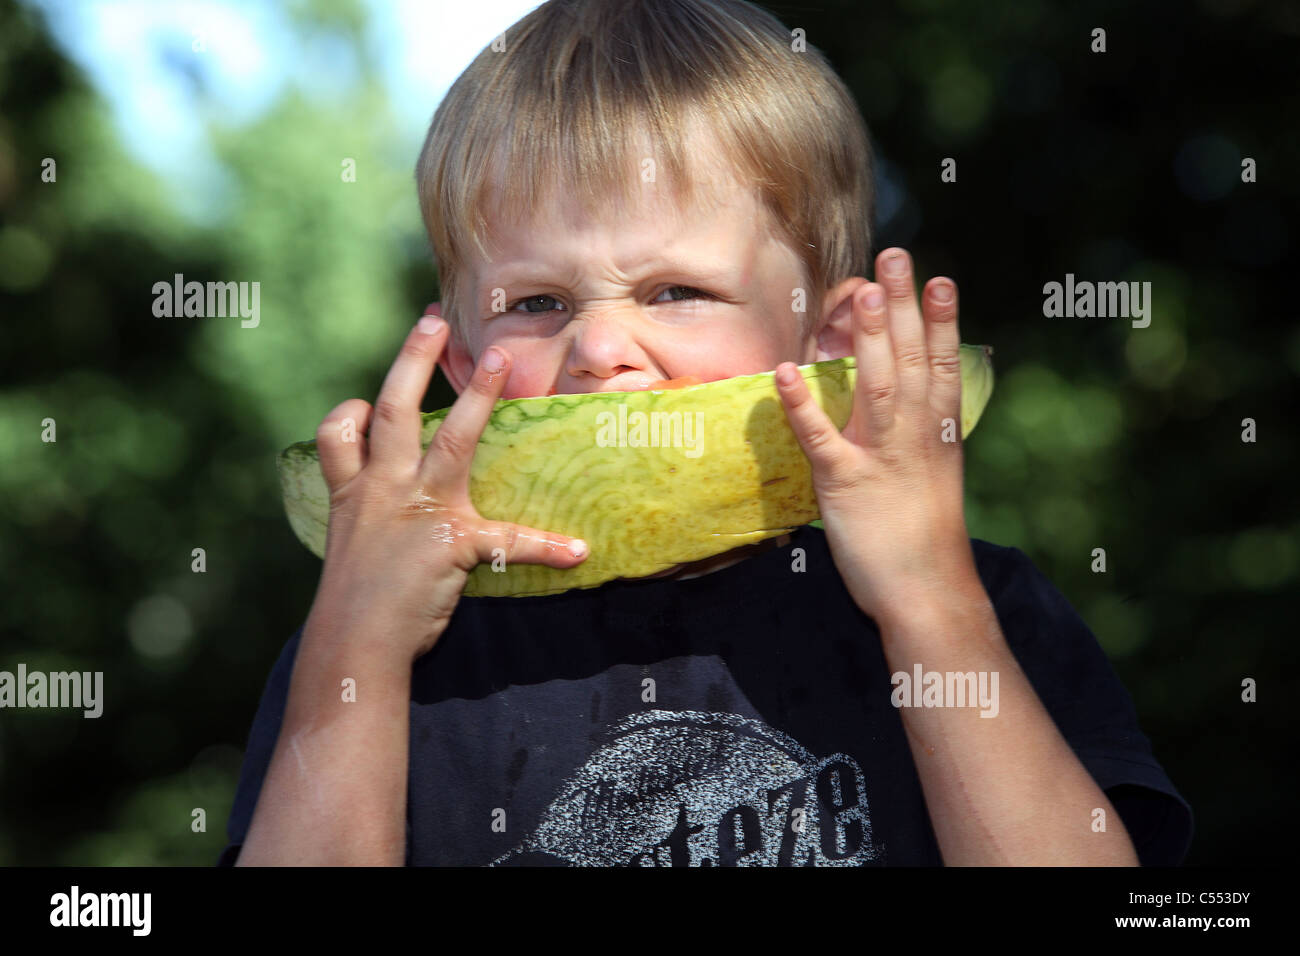 A boy eating a watermelon Stock Photo